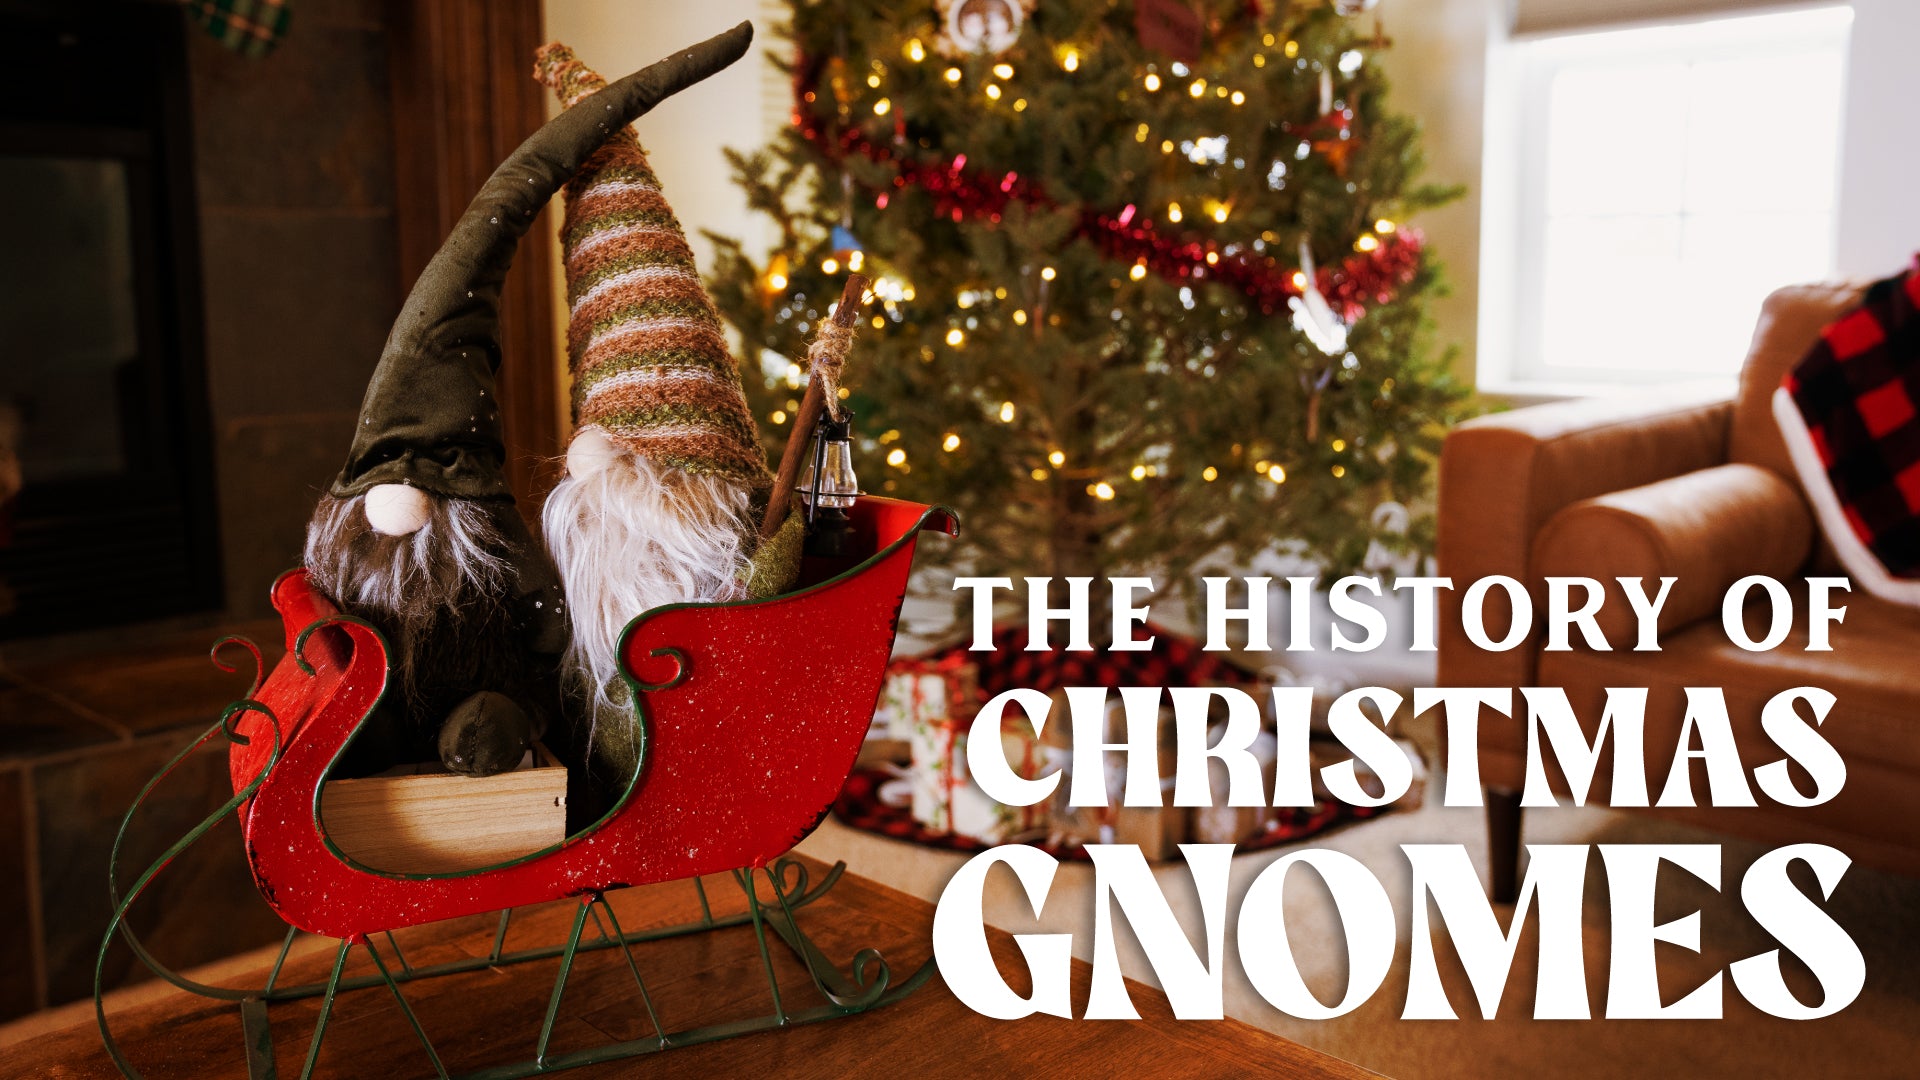 The History of Christmas Gnomes!